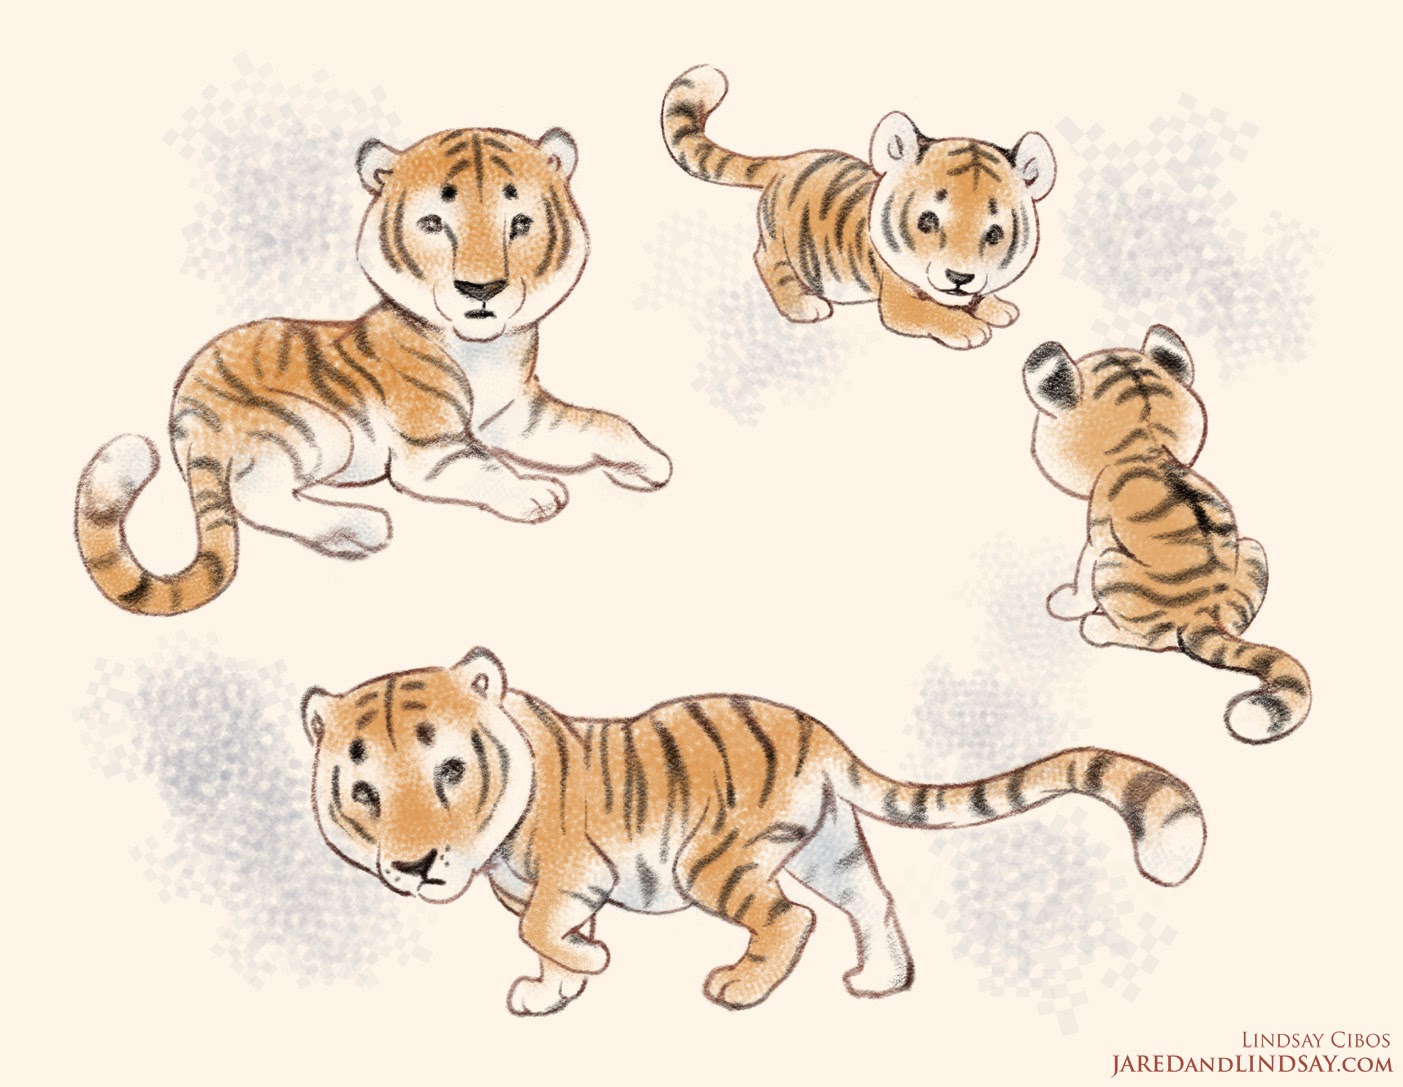 Lindsay Cibos' Art Blog Tiny Tigers